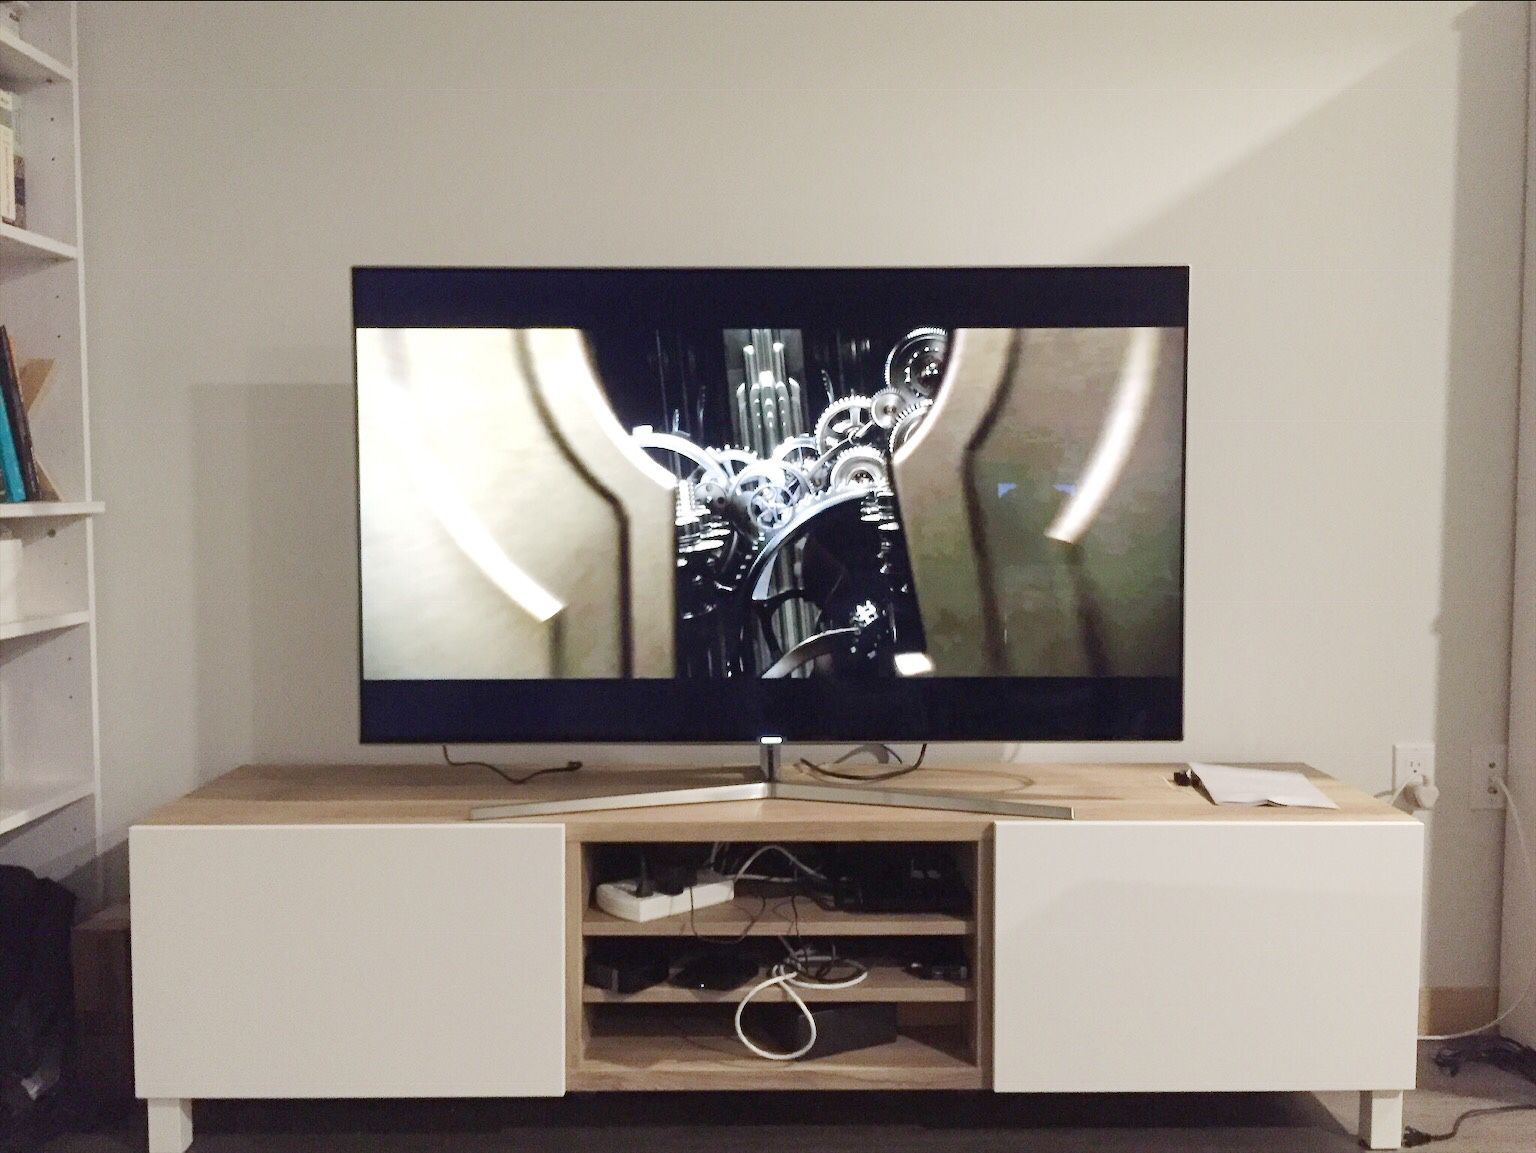 Ikea media cabinet/TV stand